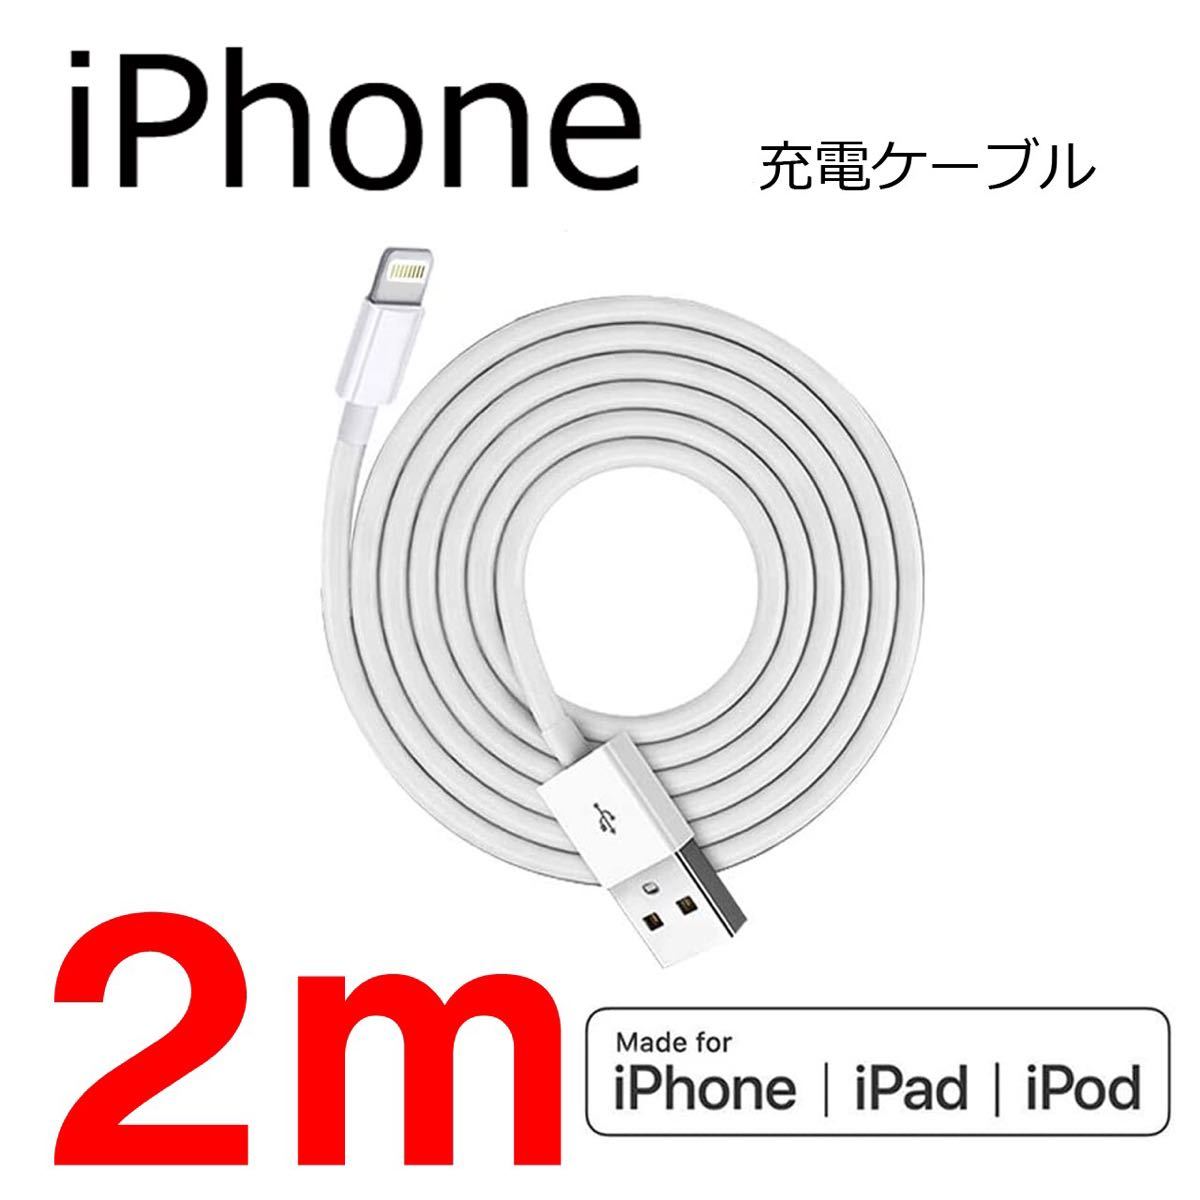 iPhone 充電器 充電ケーブル コード lightning cable ライトニングケーブル 急速充電 高速充電 データ転送 .